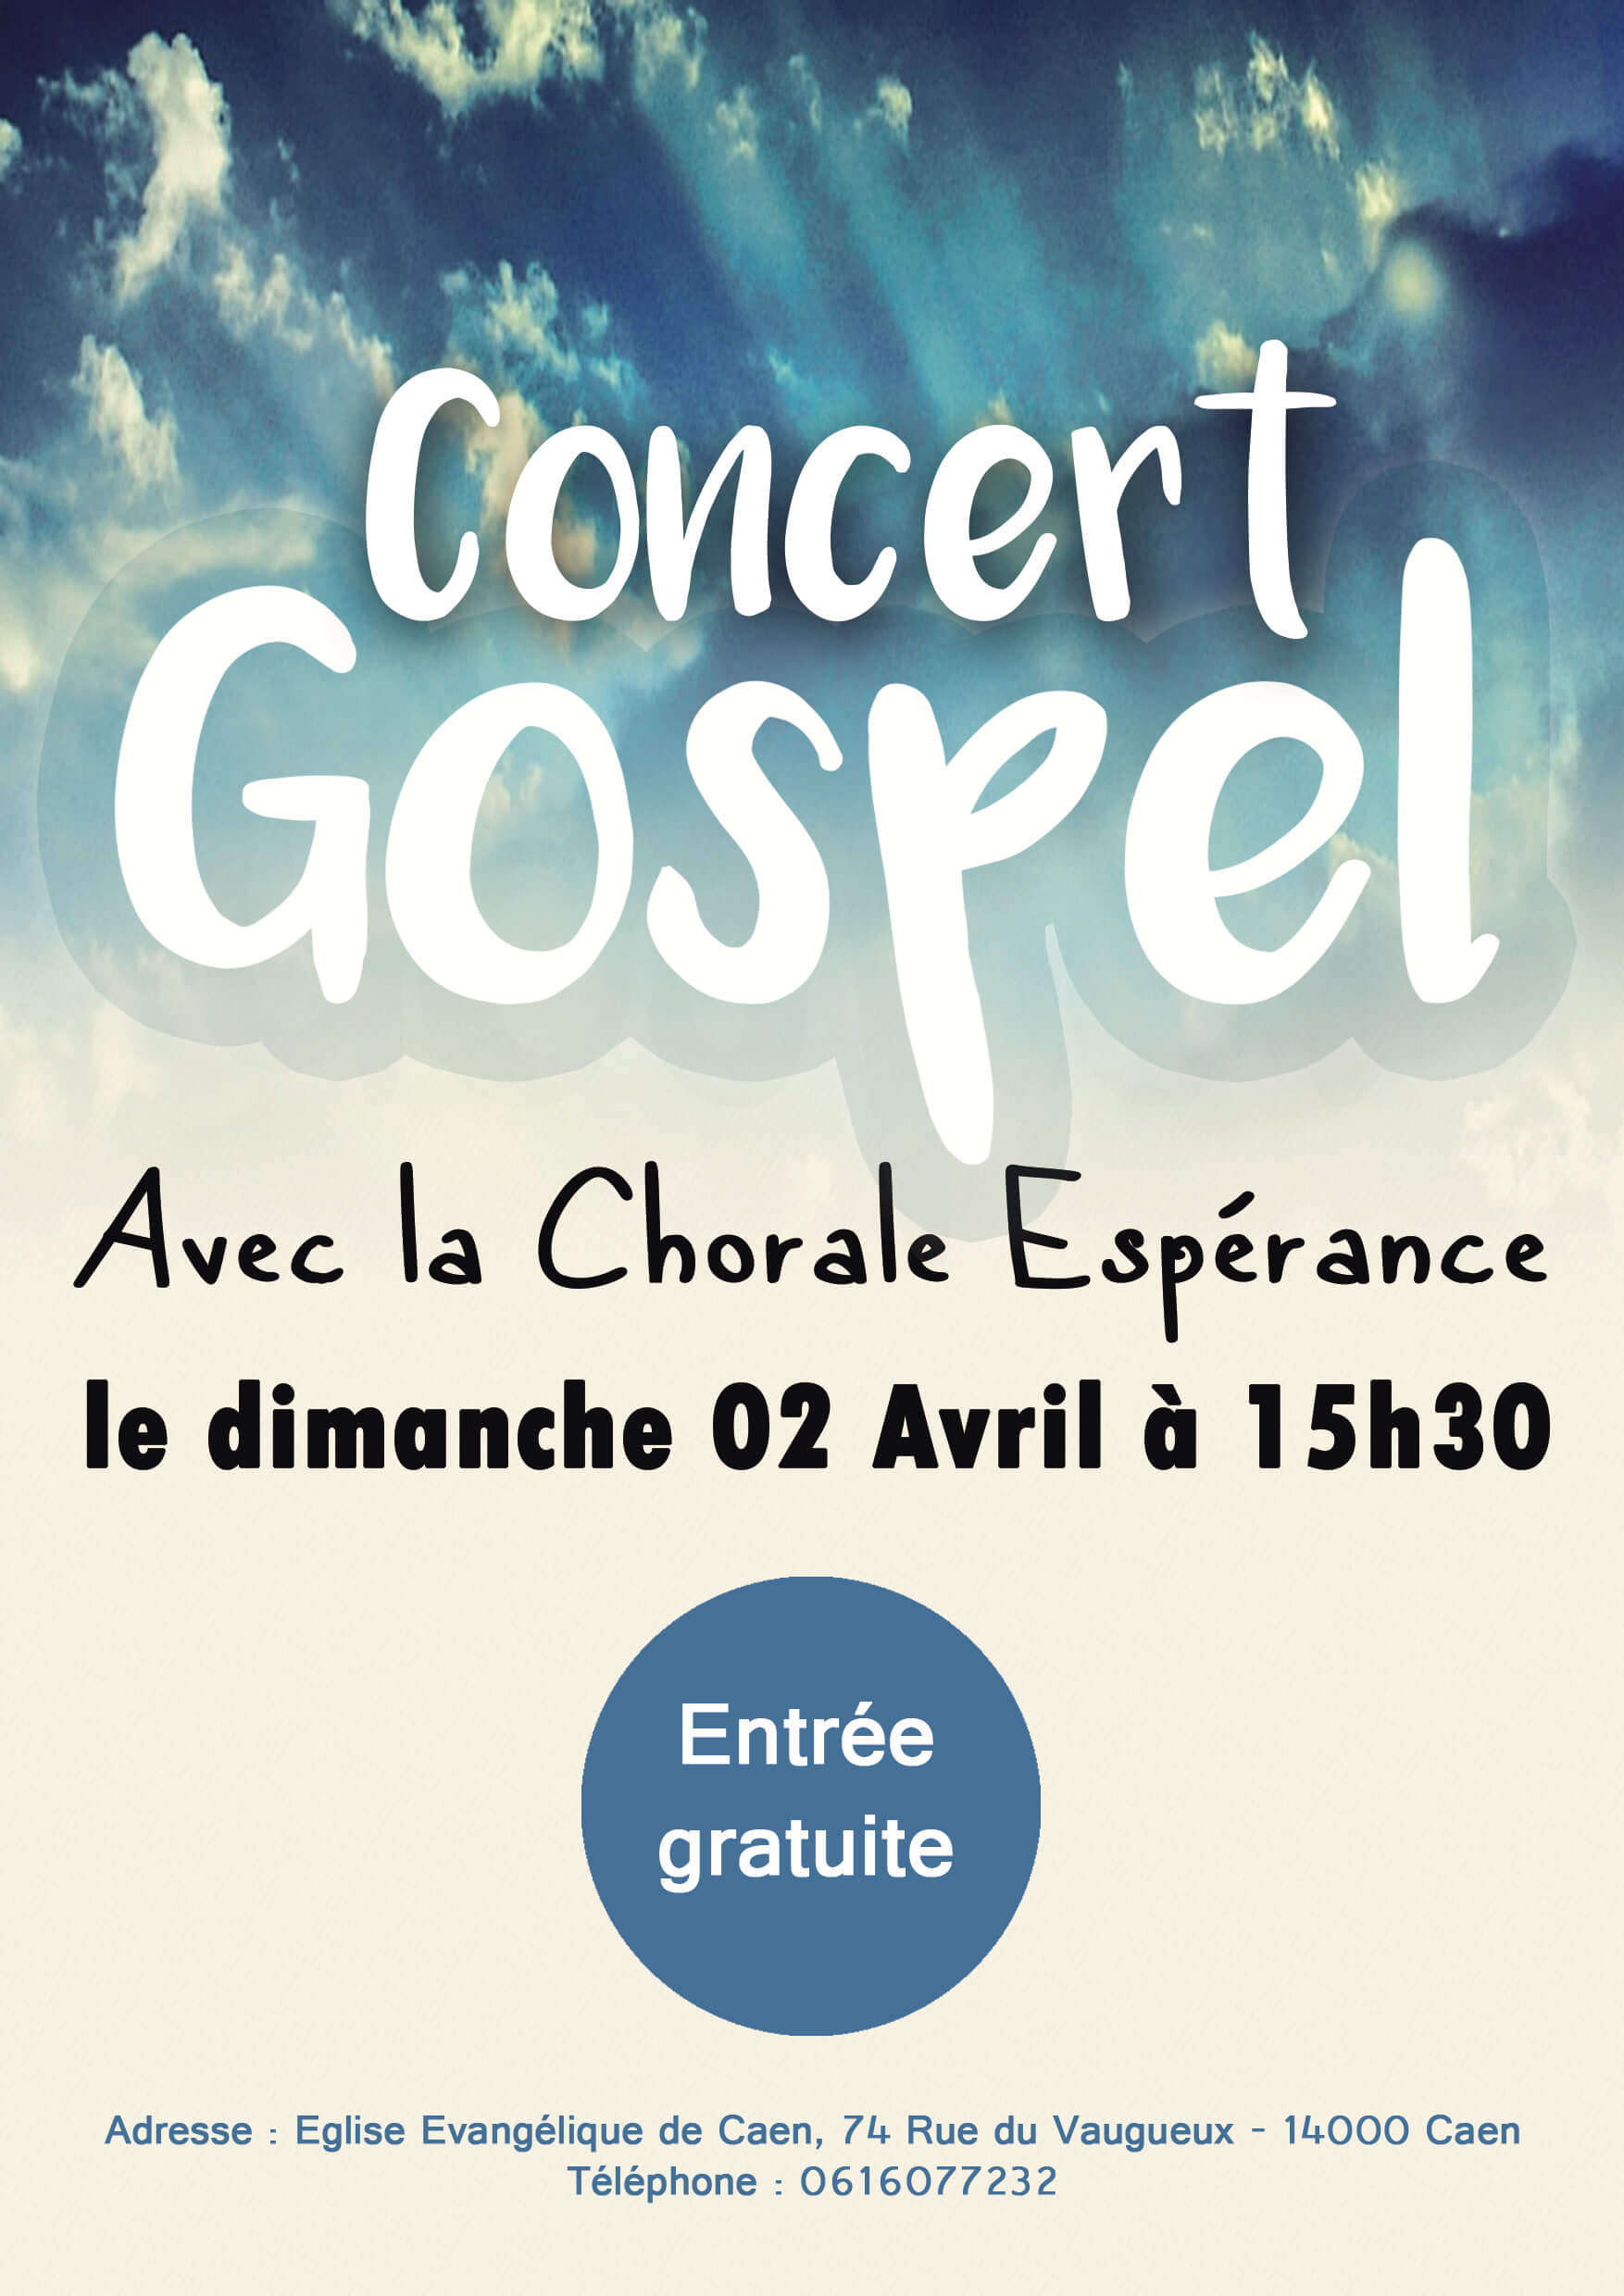 Featured image for “Concert Gospel”